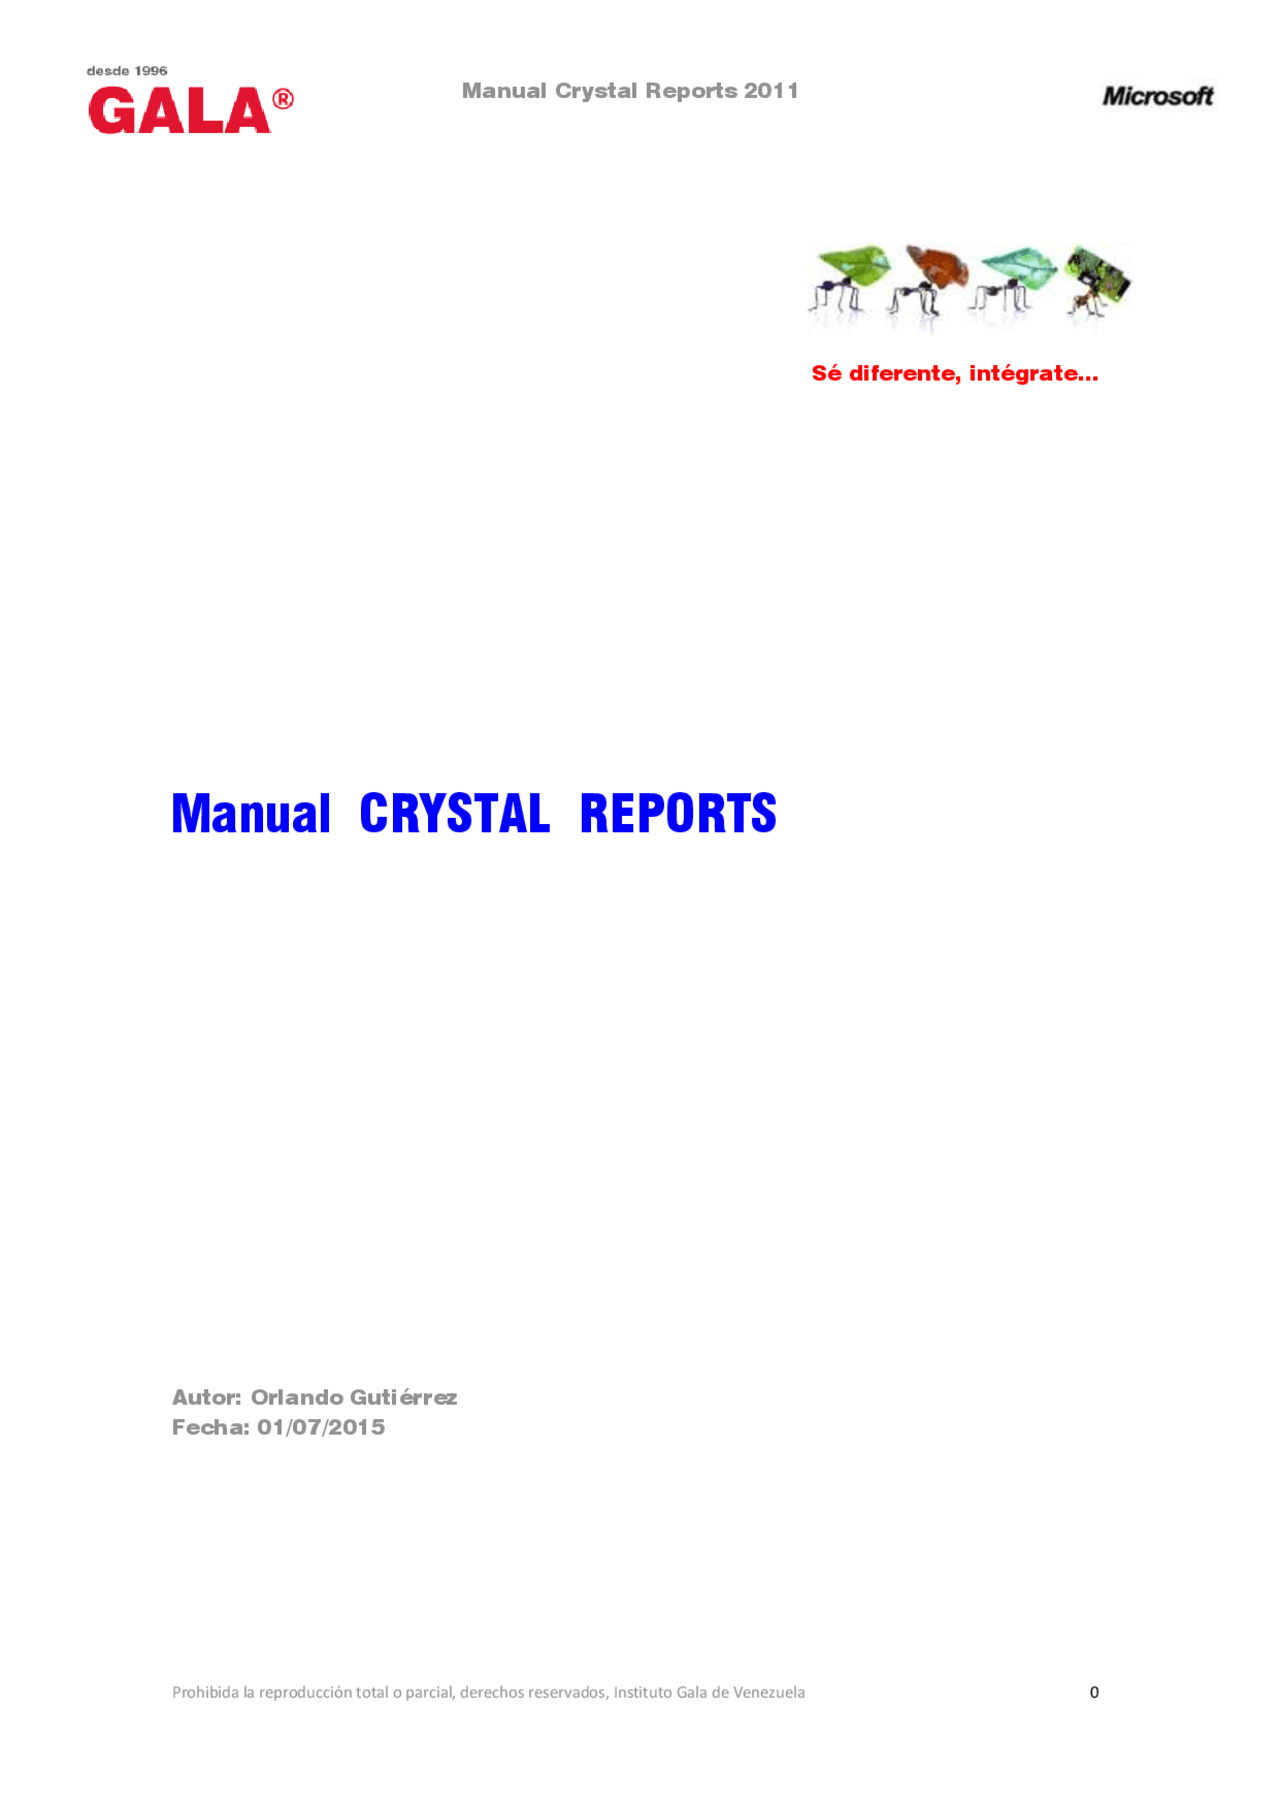 imprimir sin vista previa crystal reports